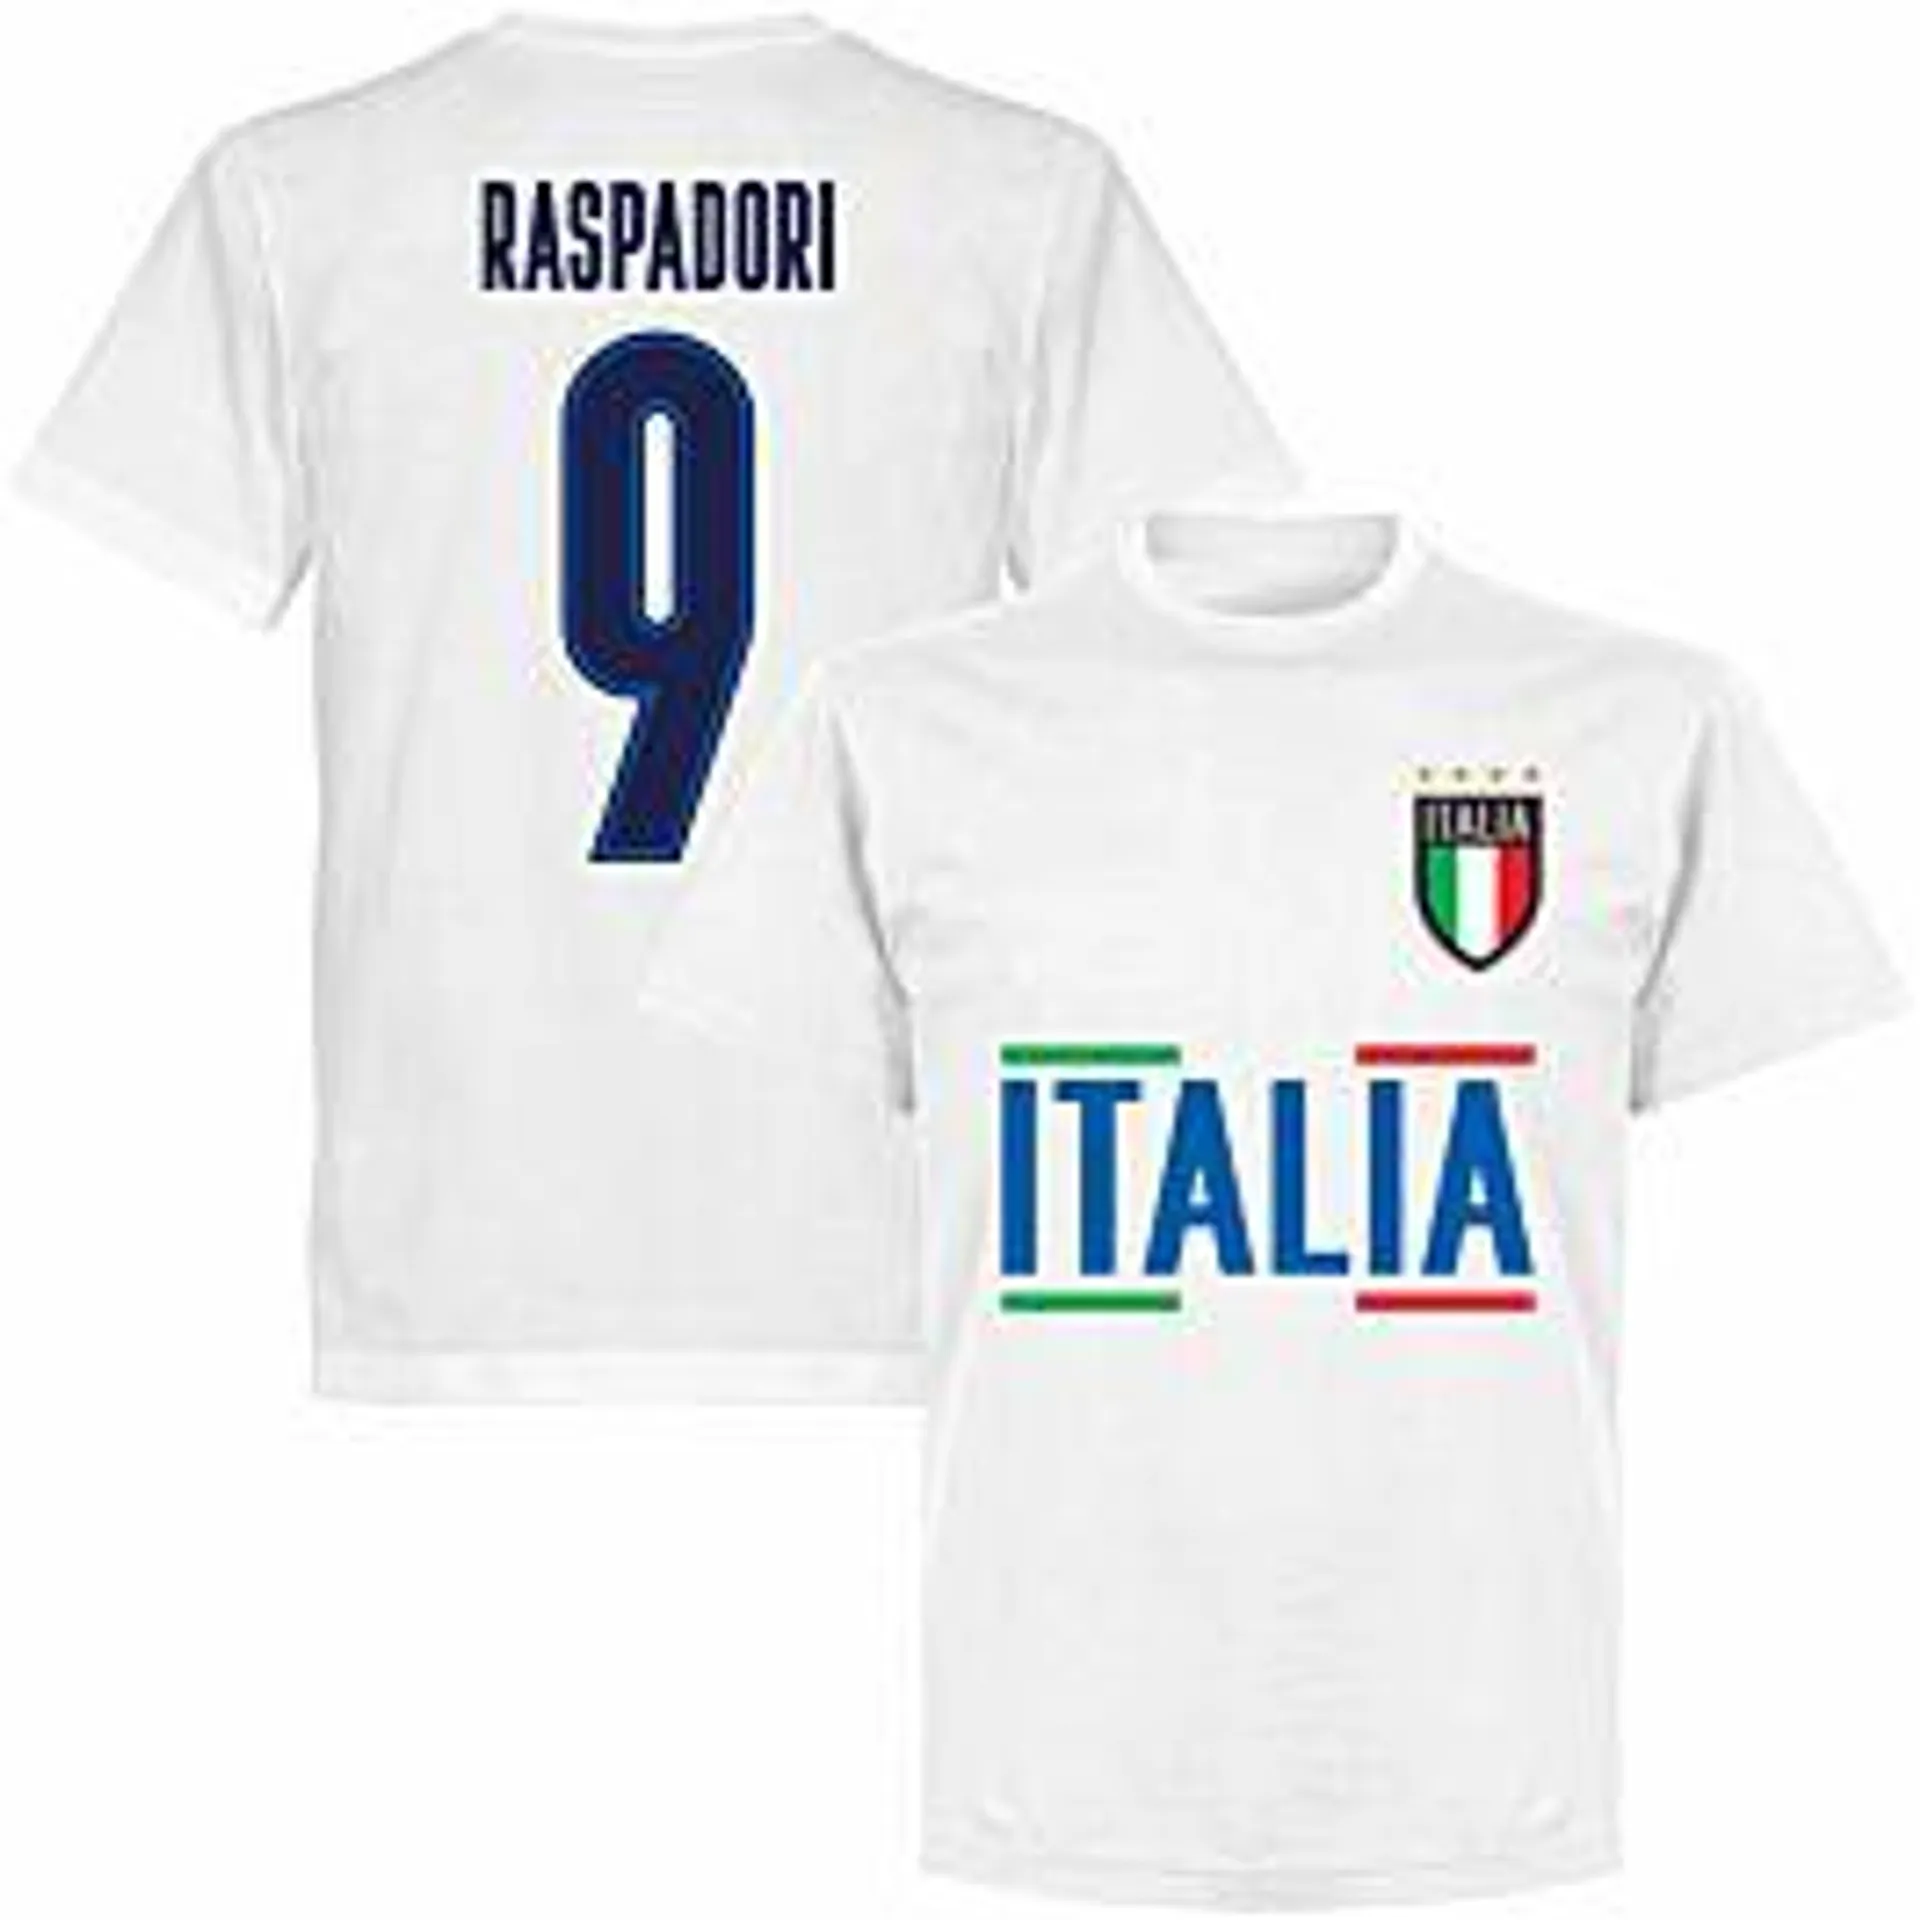 Italy Raspadori 9 Team KIDS T-shirt - White